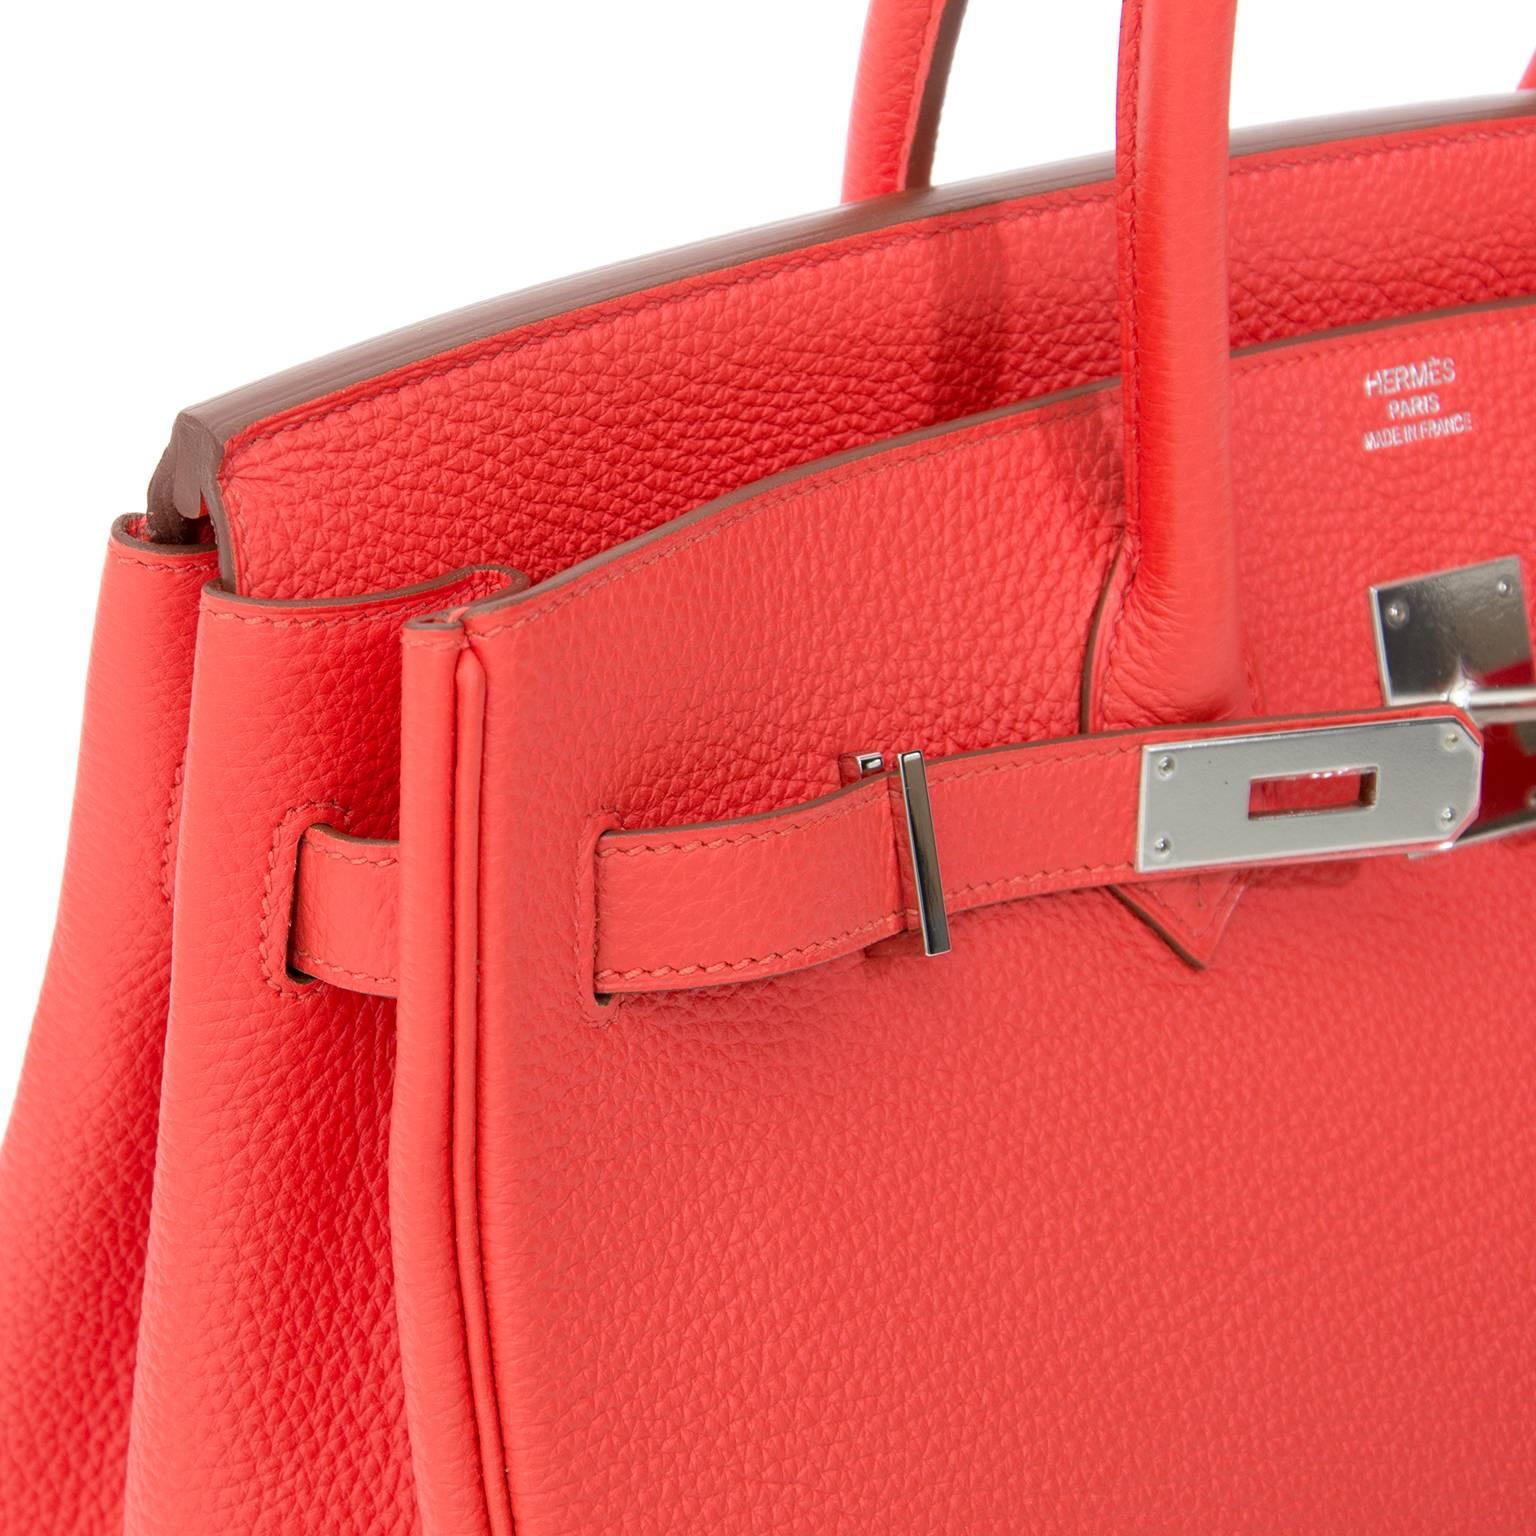 BRAND NEW Hermès Birkin Bag Togo Capucine PHW 35cm  (Rot)